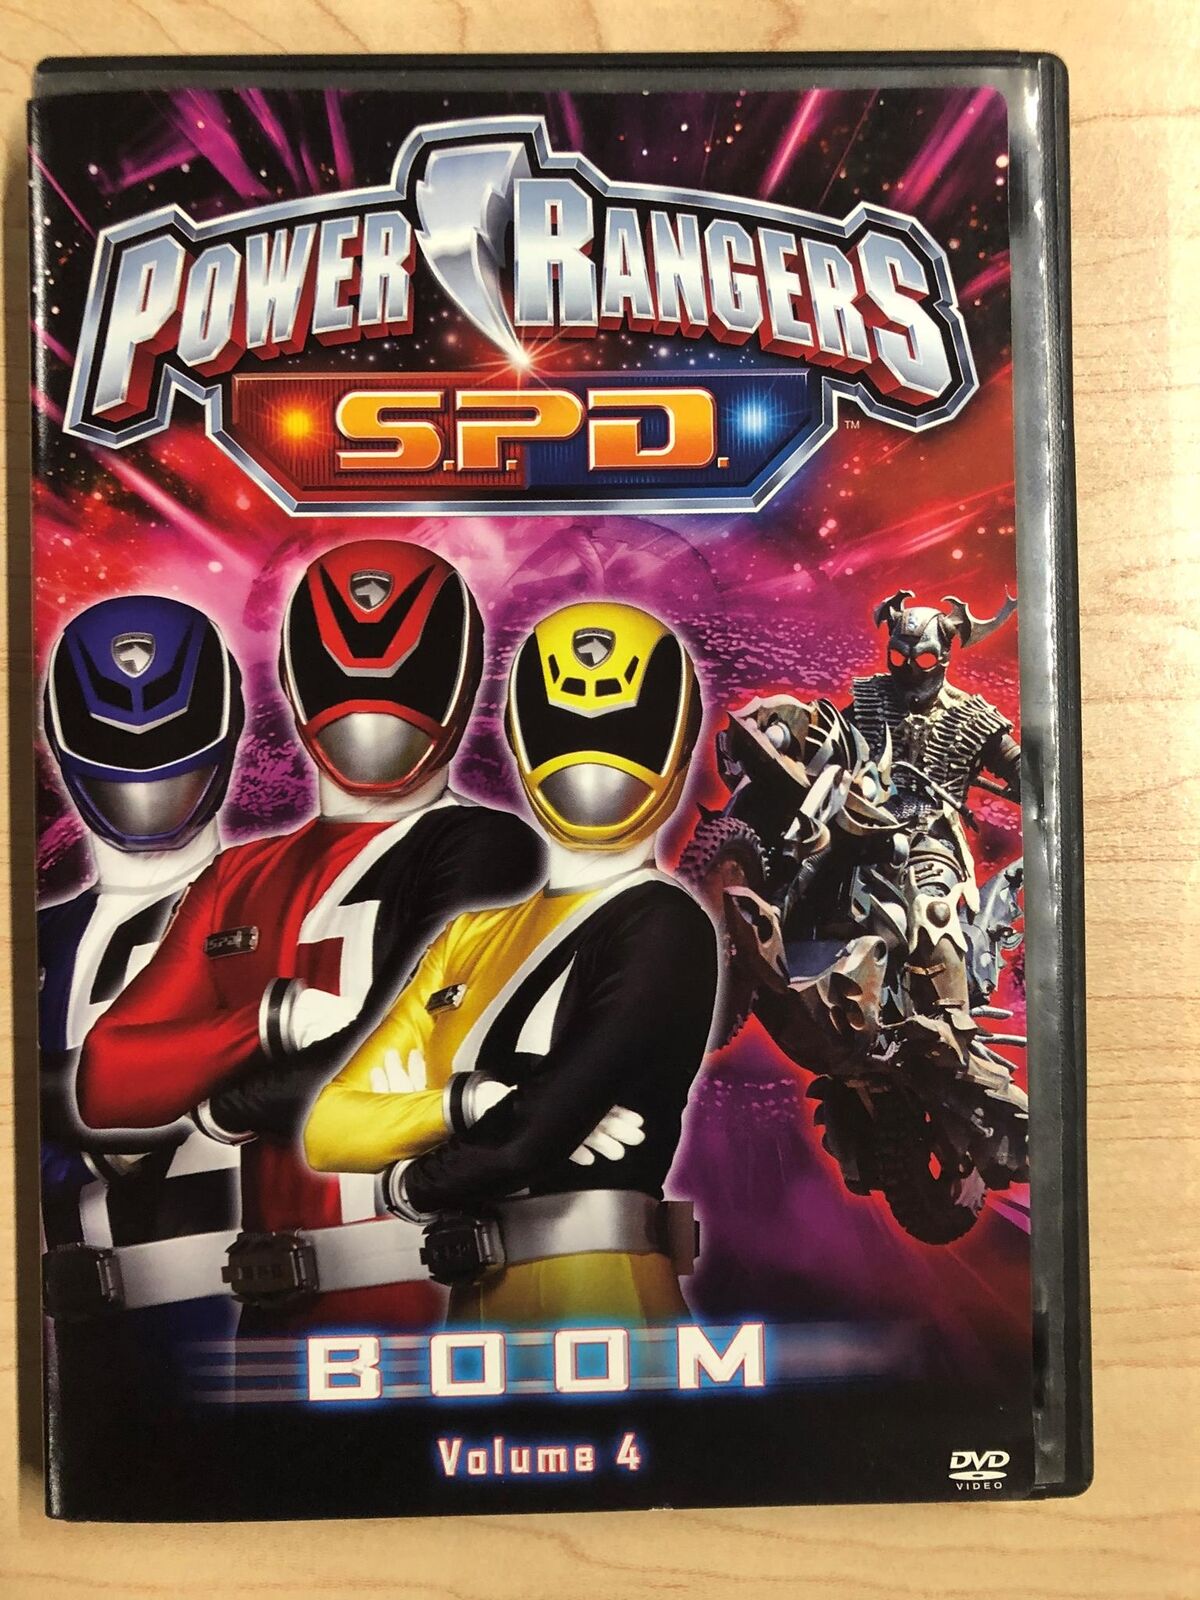 Power Rangers S.P.D. Boom Volume 4 (DVD, 2005) - J0205